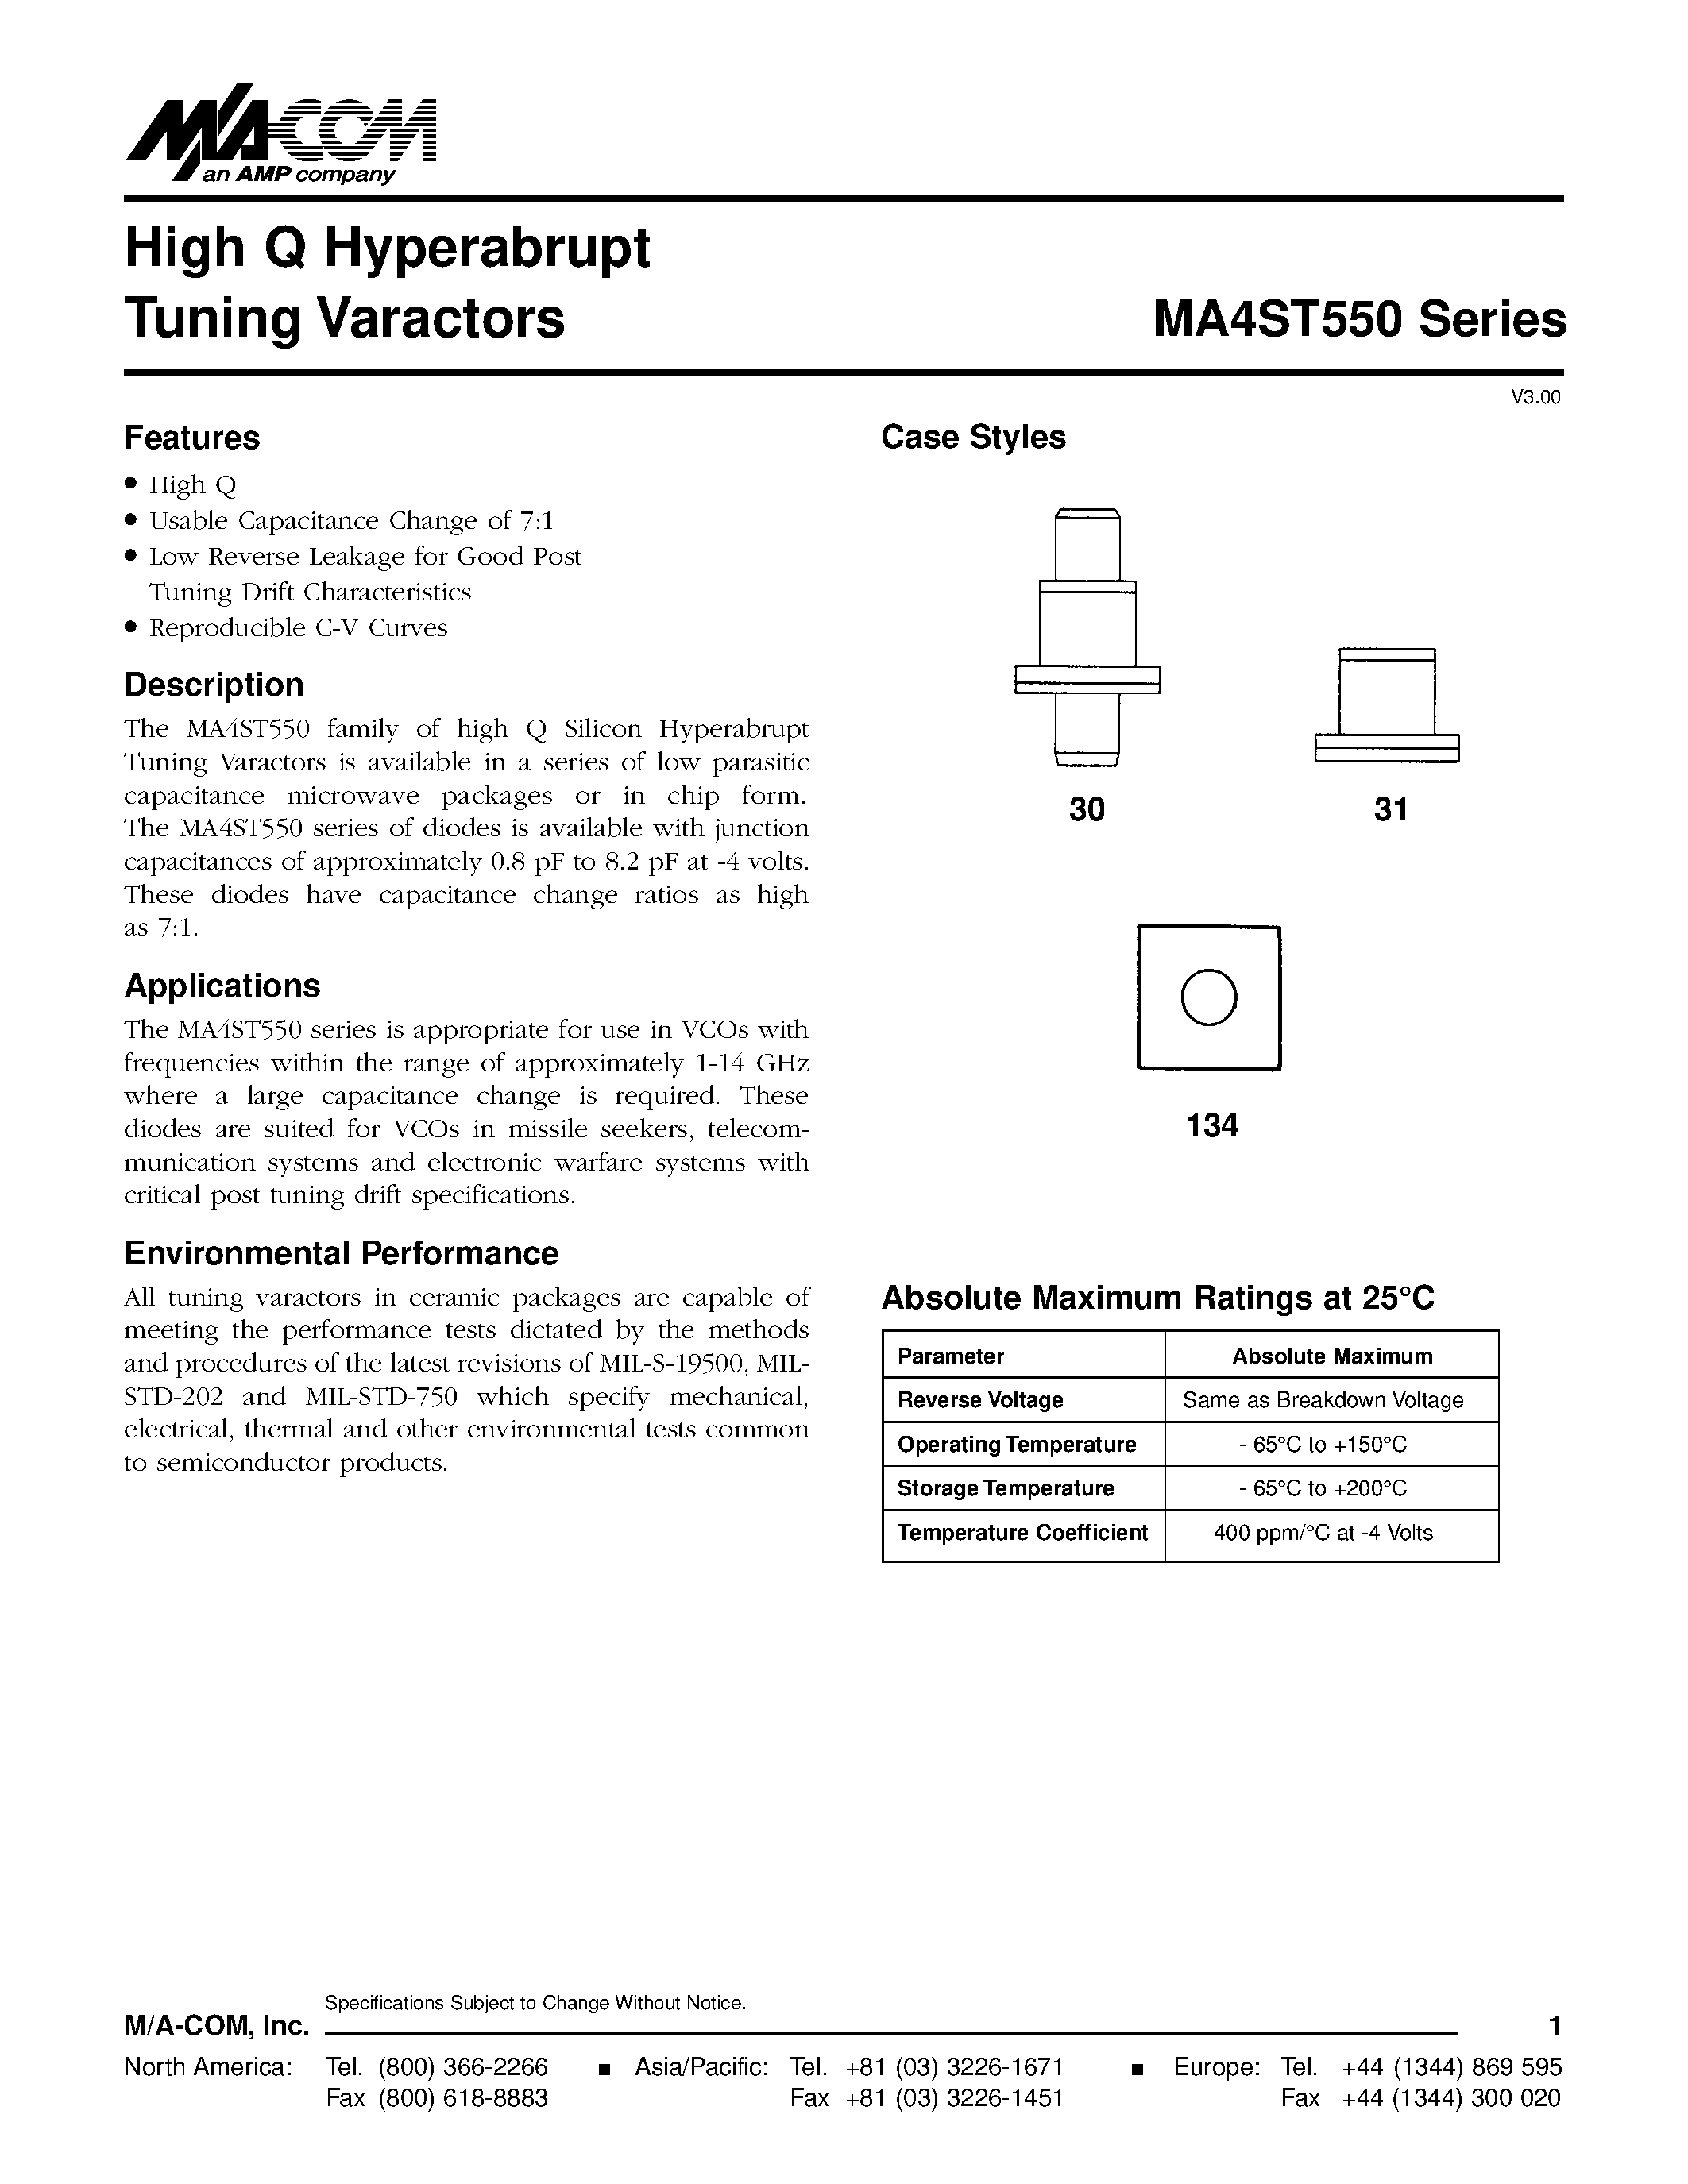 Datasheet MA4ST563 - High Q Hyperabrupt Tuning Varactors page 1